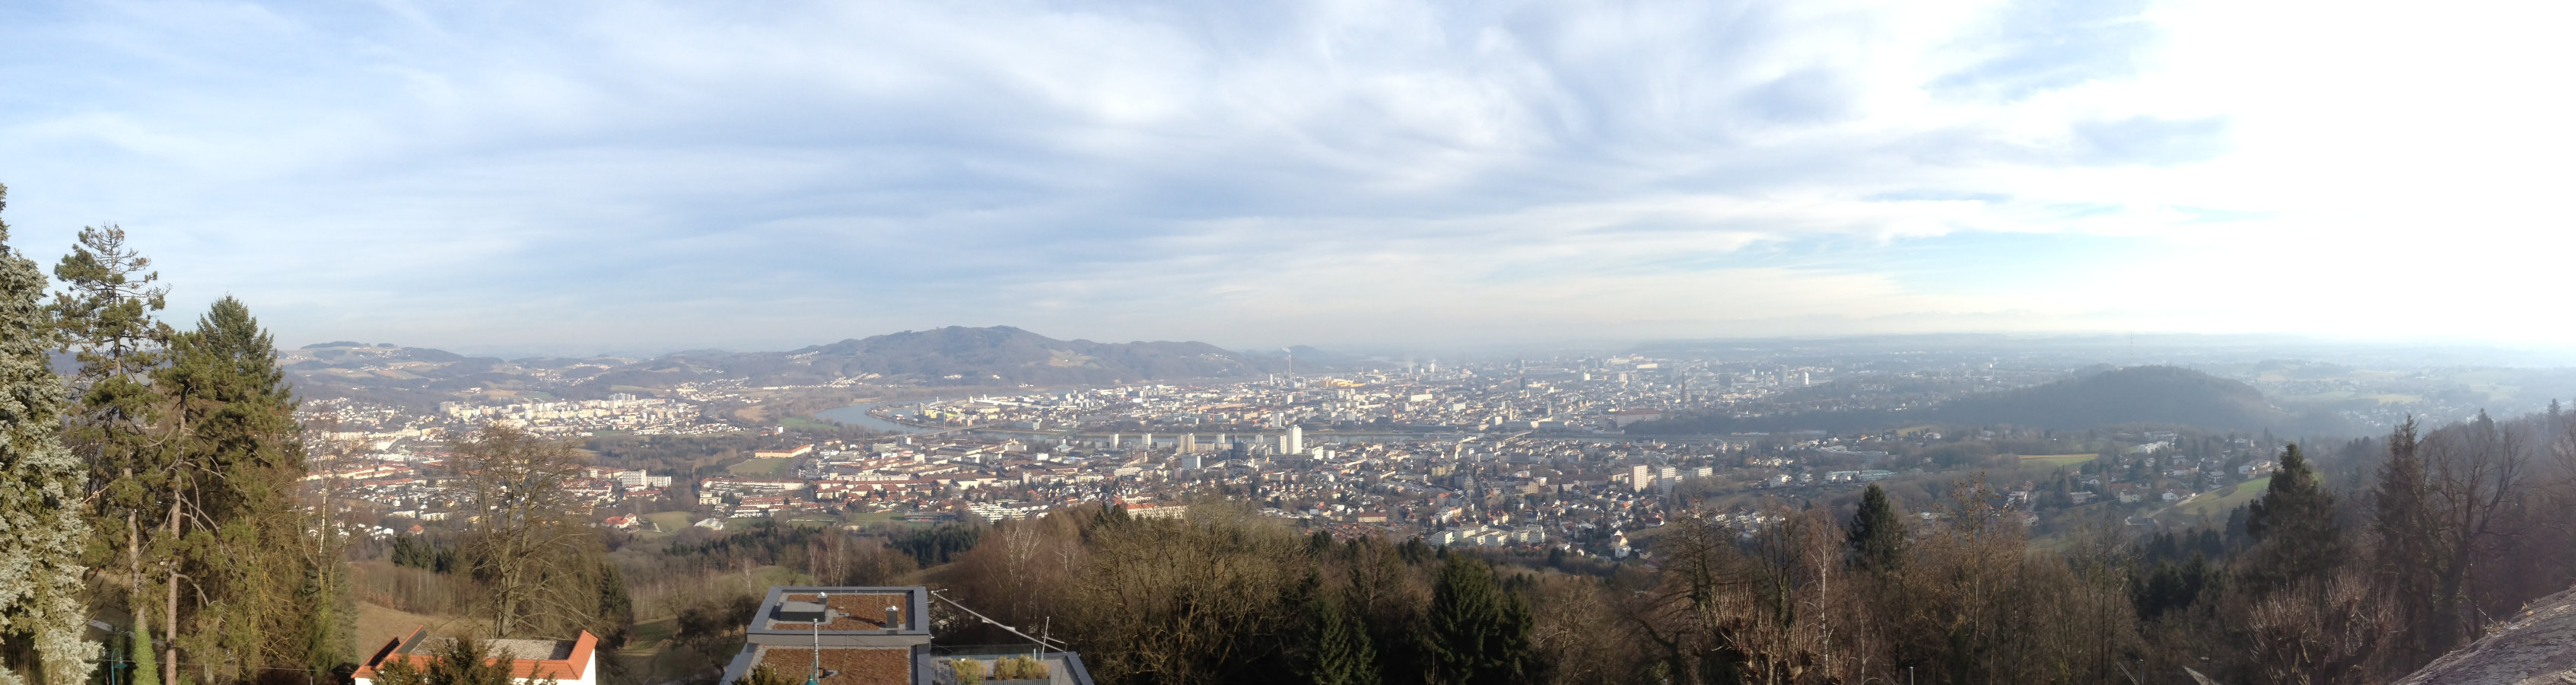 Linz skyline